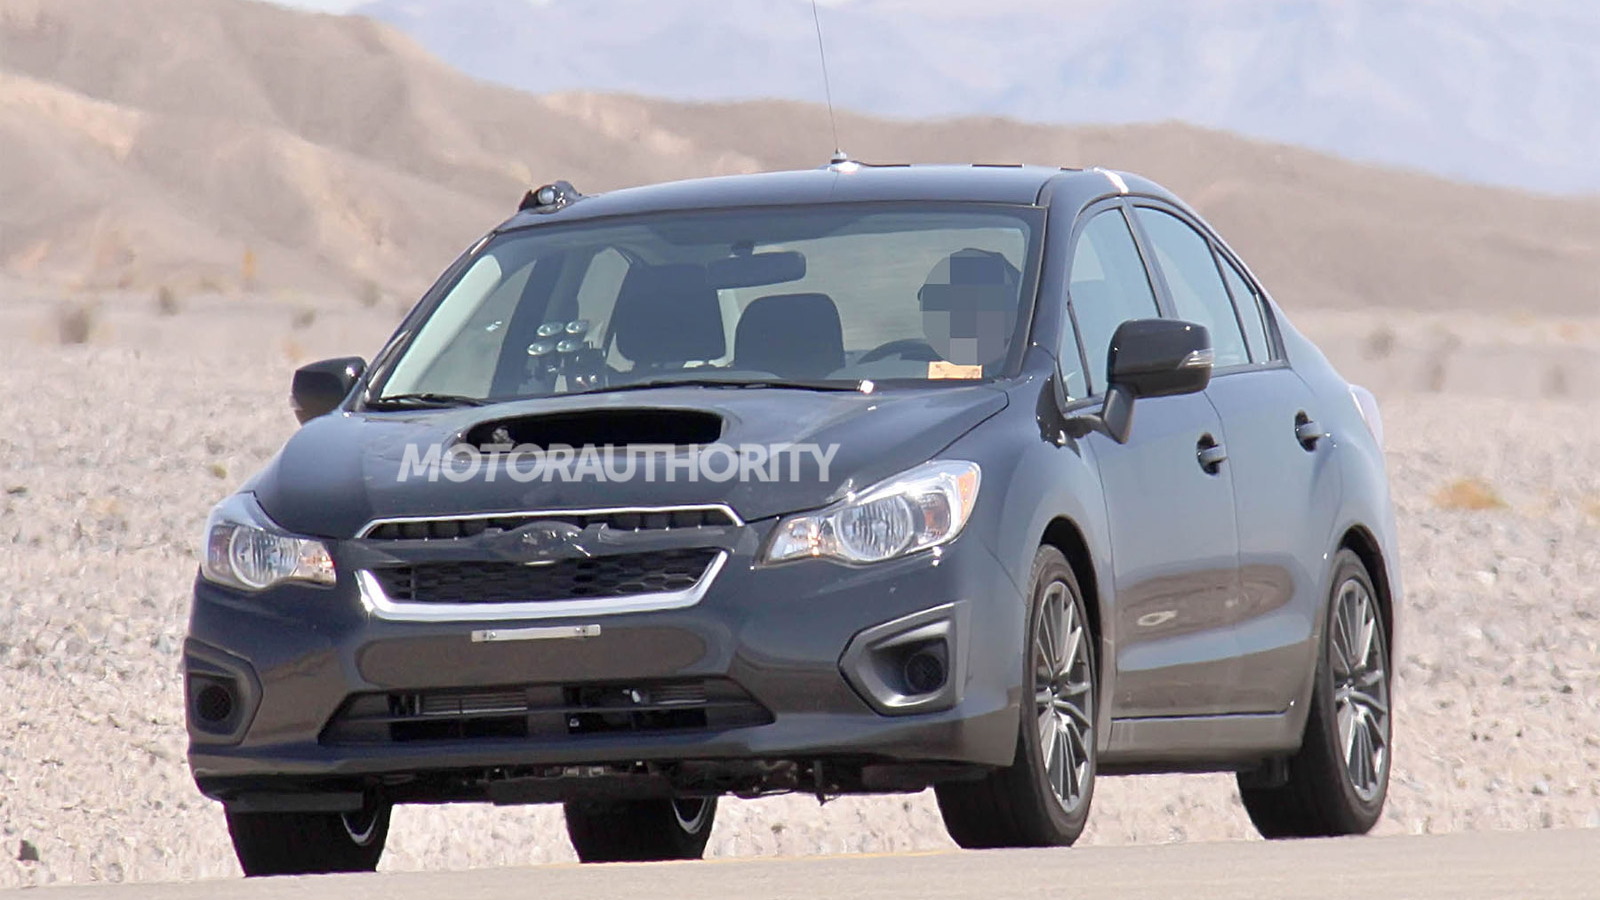 2015 Subaru WRX test mule spy shots